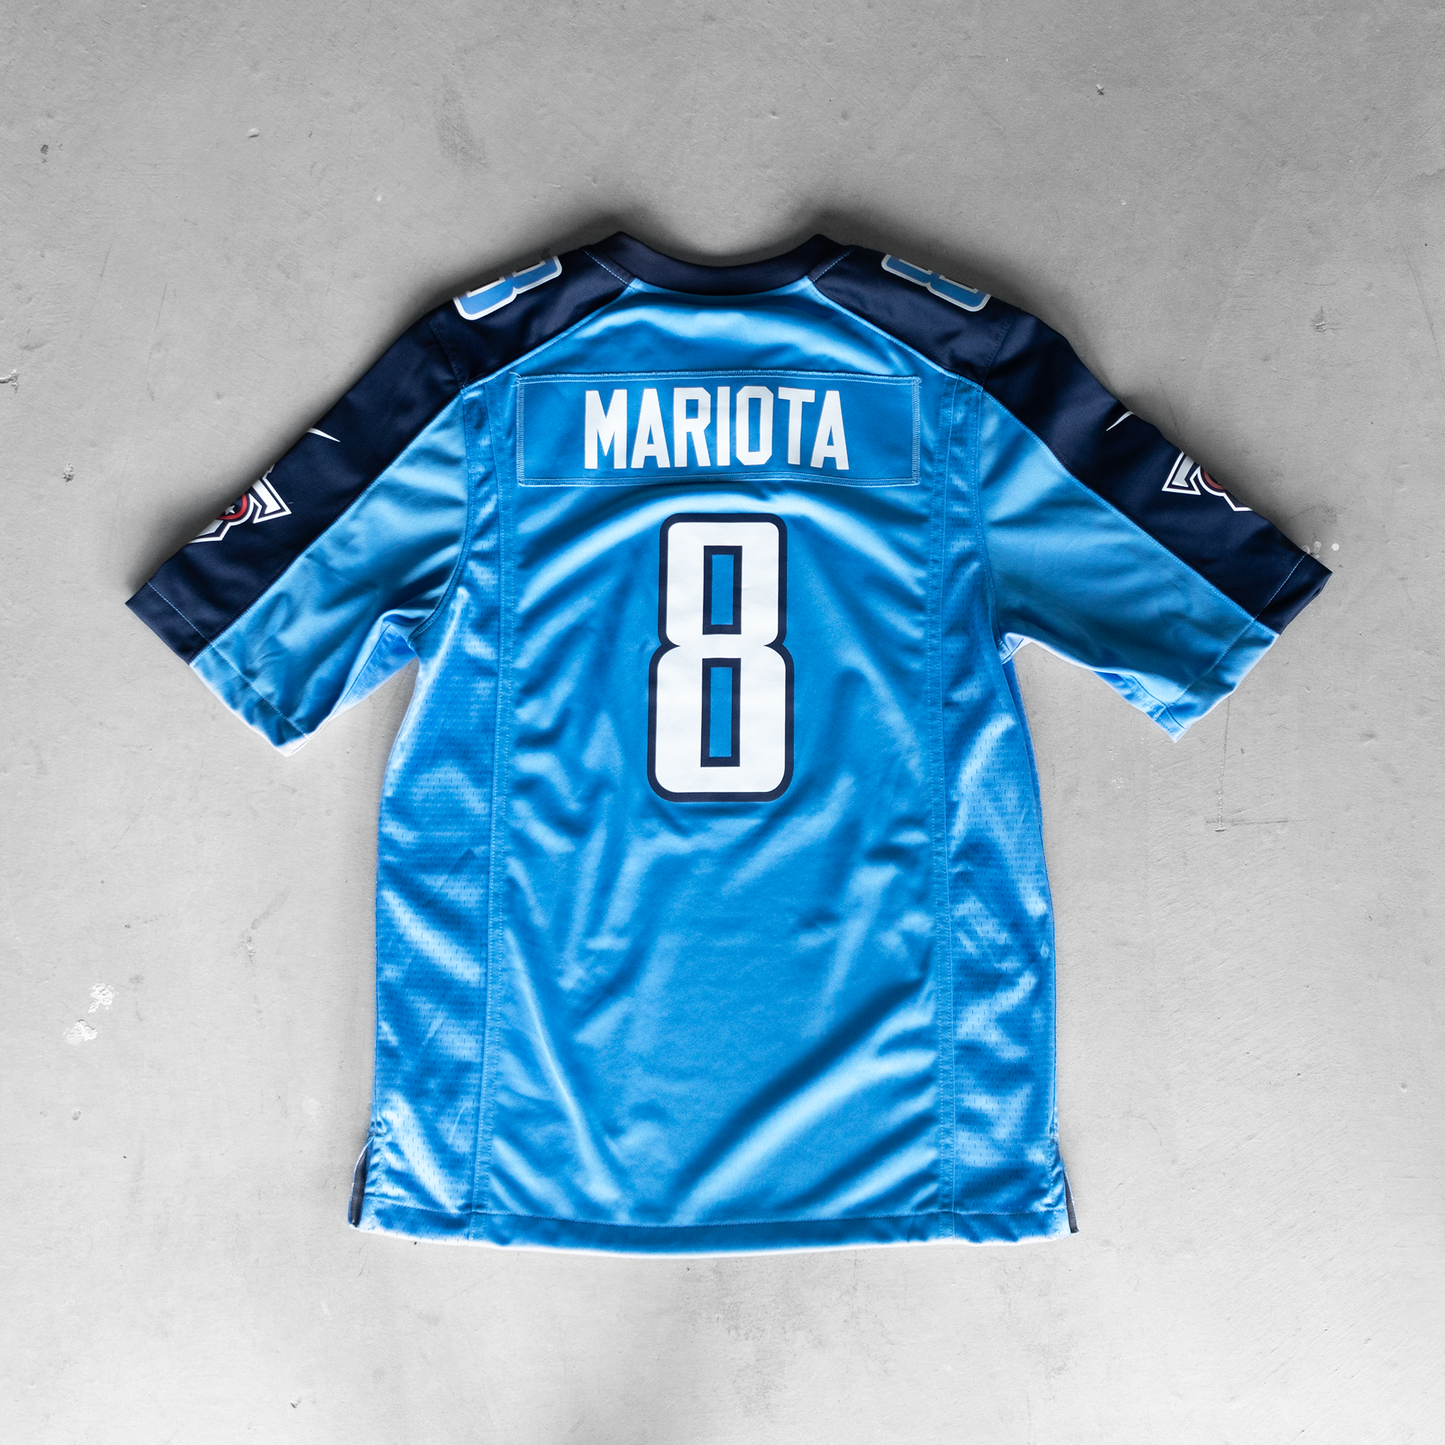 Nike NFL Marcus Mariota Tennessee Titans #8 Football Jersey (S)